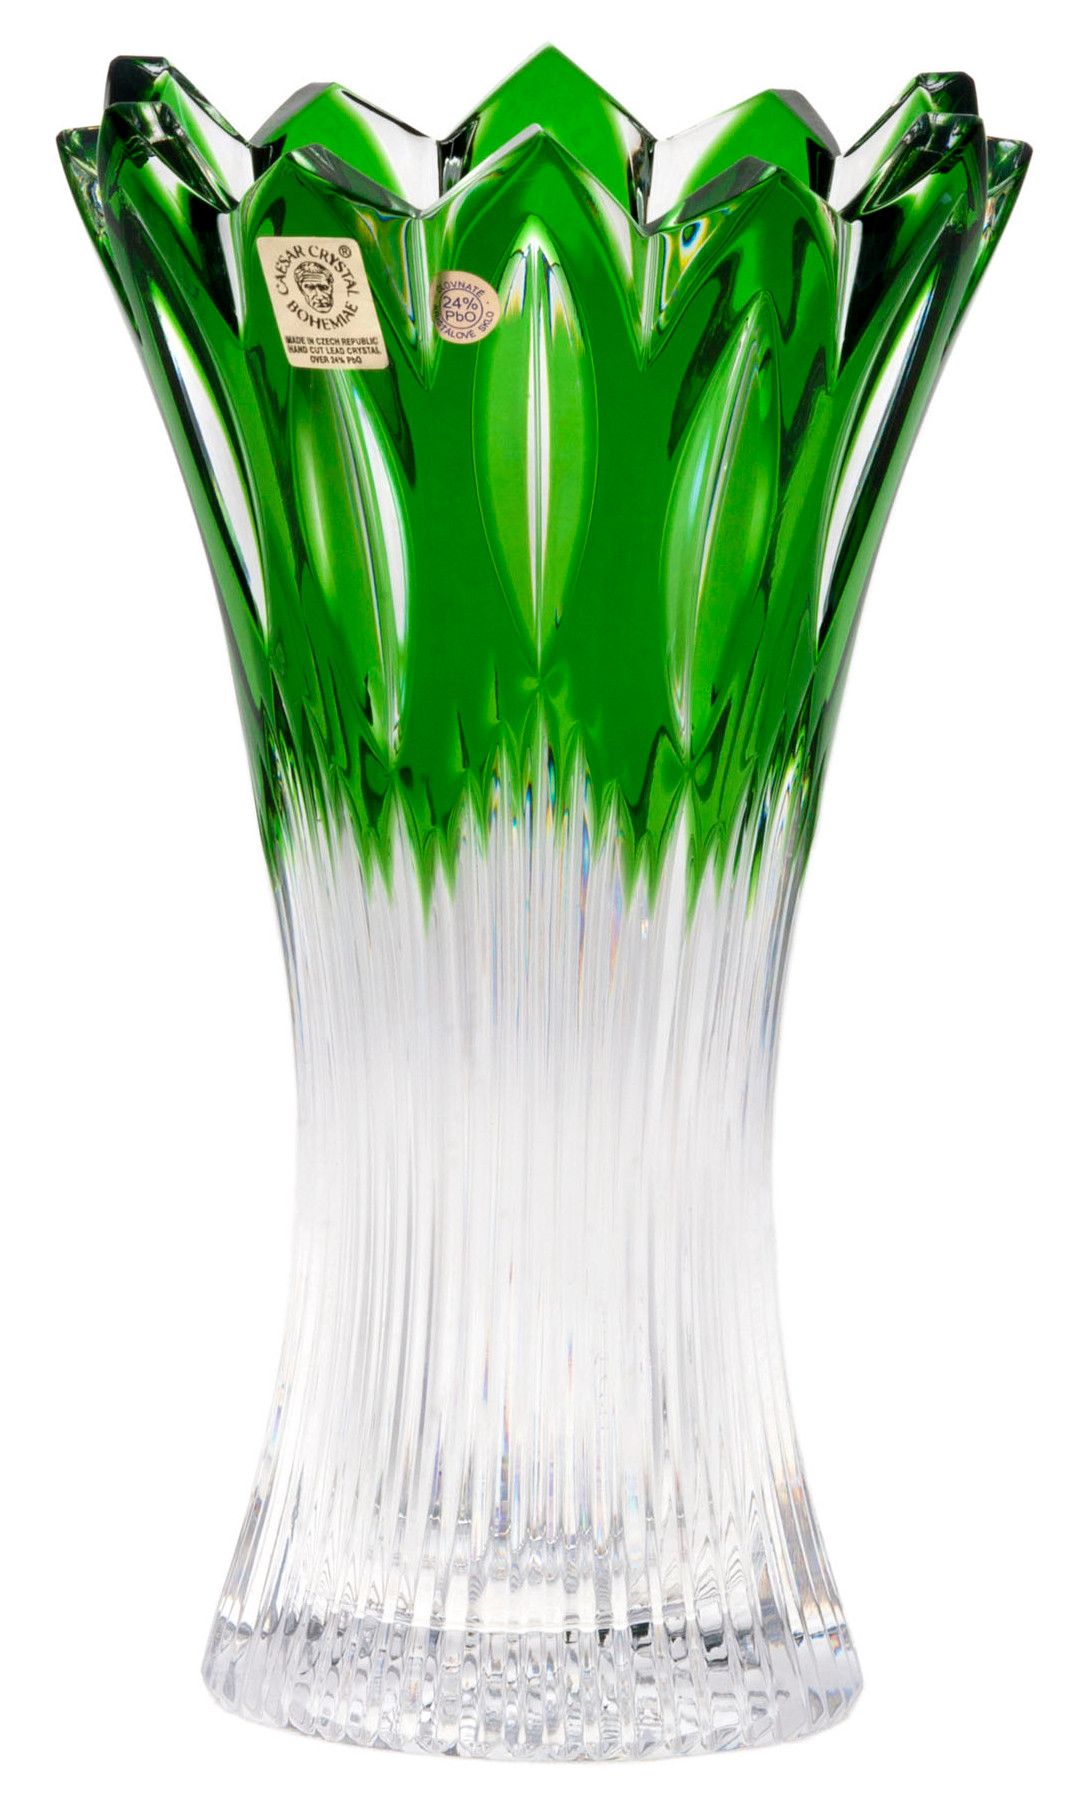 Krištáľová váza Flame, farba zelená, výška 205 mm